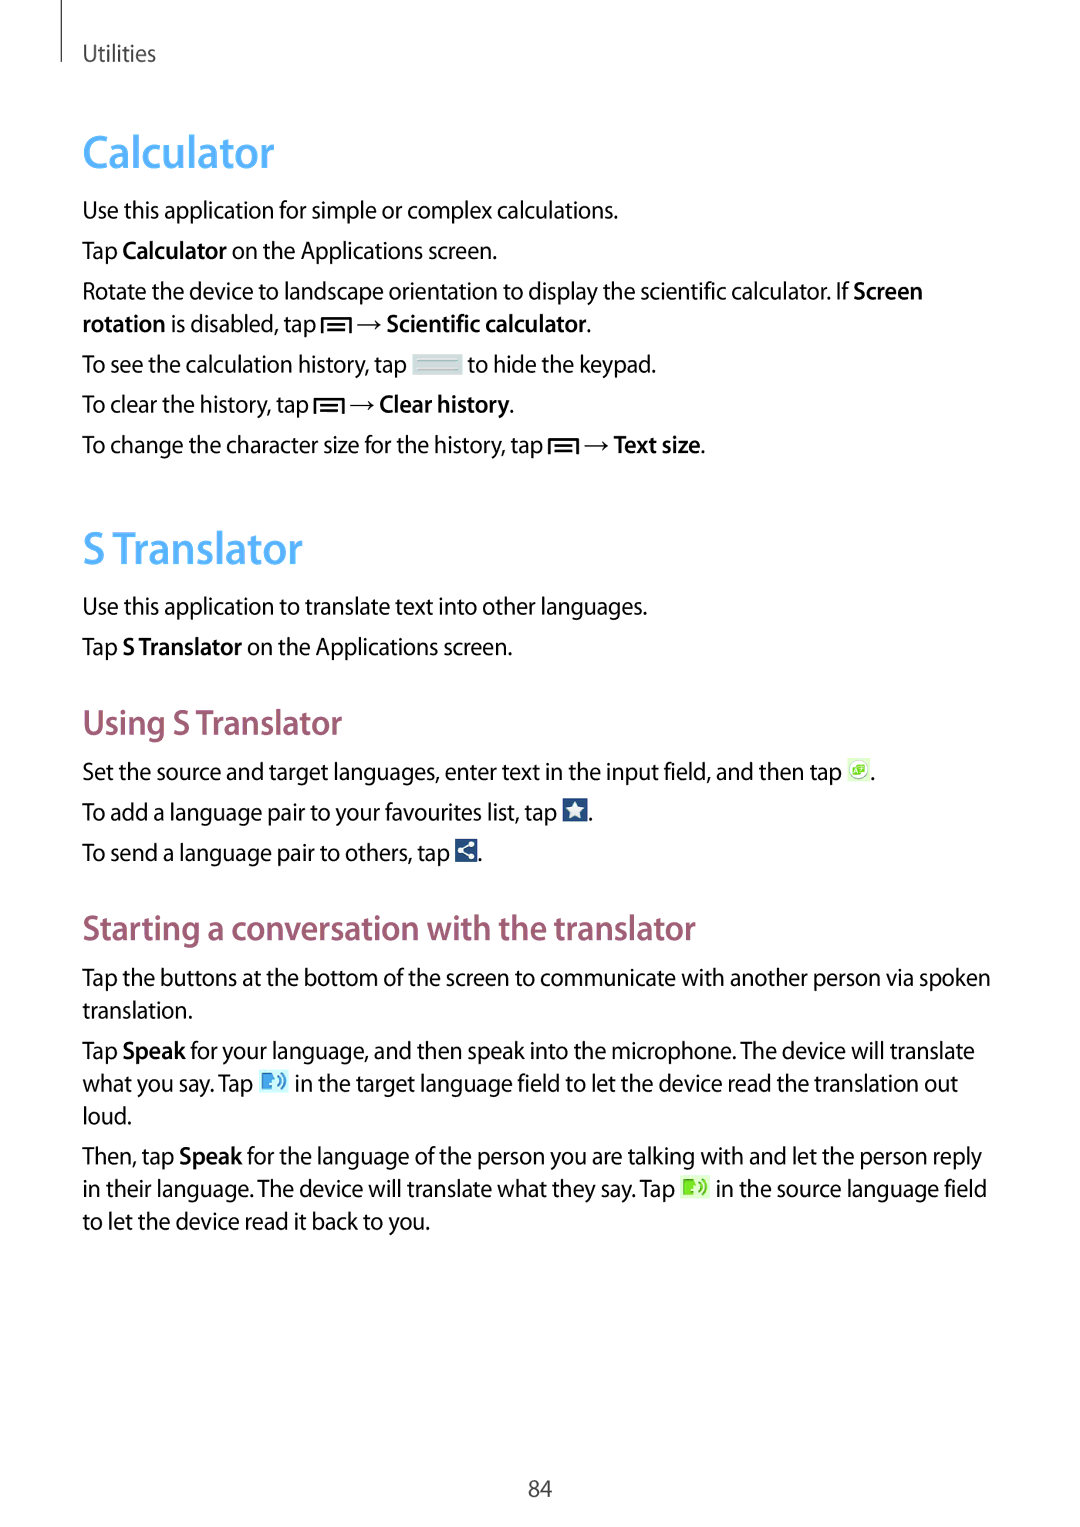 Samsung SM-T310 user manual Calculator, Using S Translator, Starting a conversation with the translator 